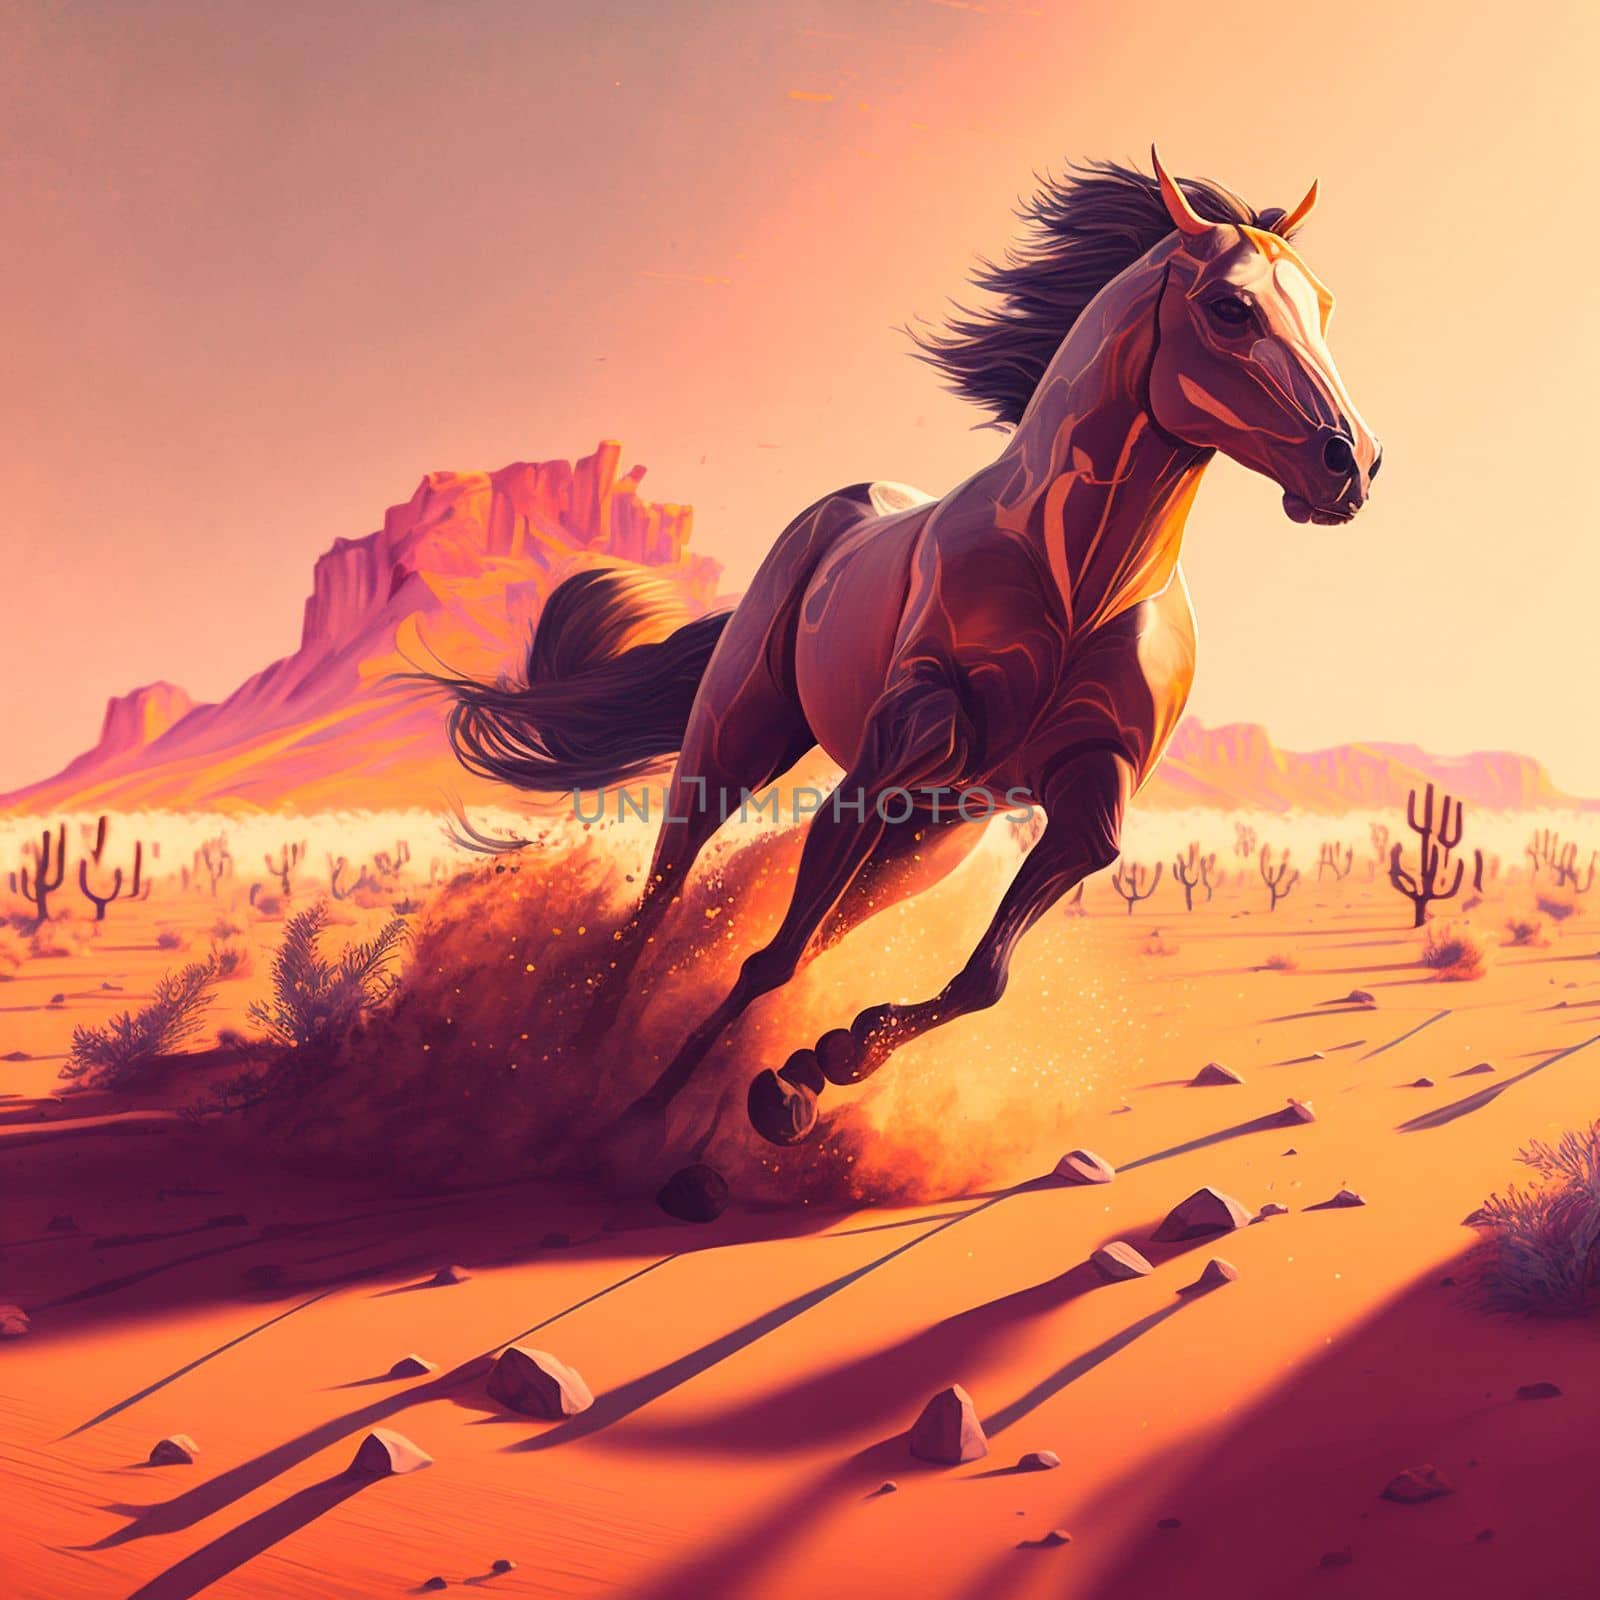 The horse runs through the desert, kicking up the sand. High quality illustration